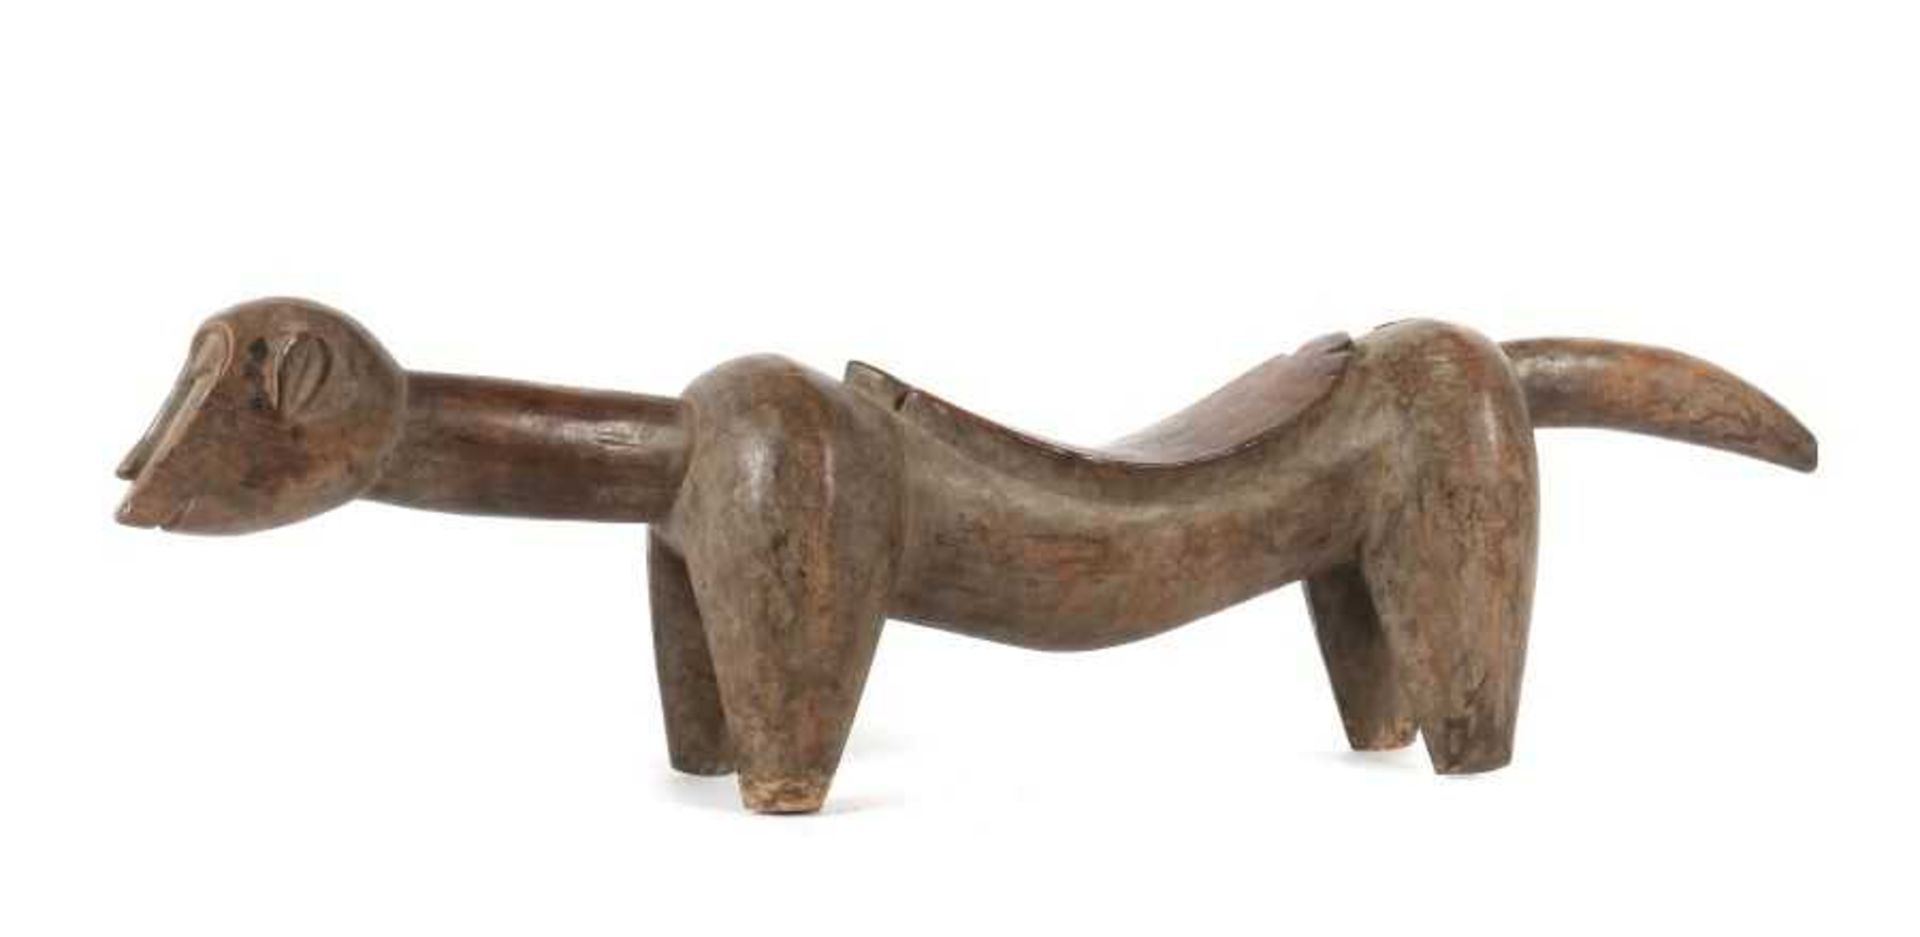 Zoomorphe Nackenstütze Afrika, Holz geschnitzt, graubraun patiniert, auf 4 kegelförmigen Beinen